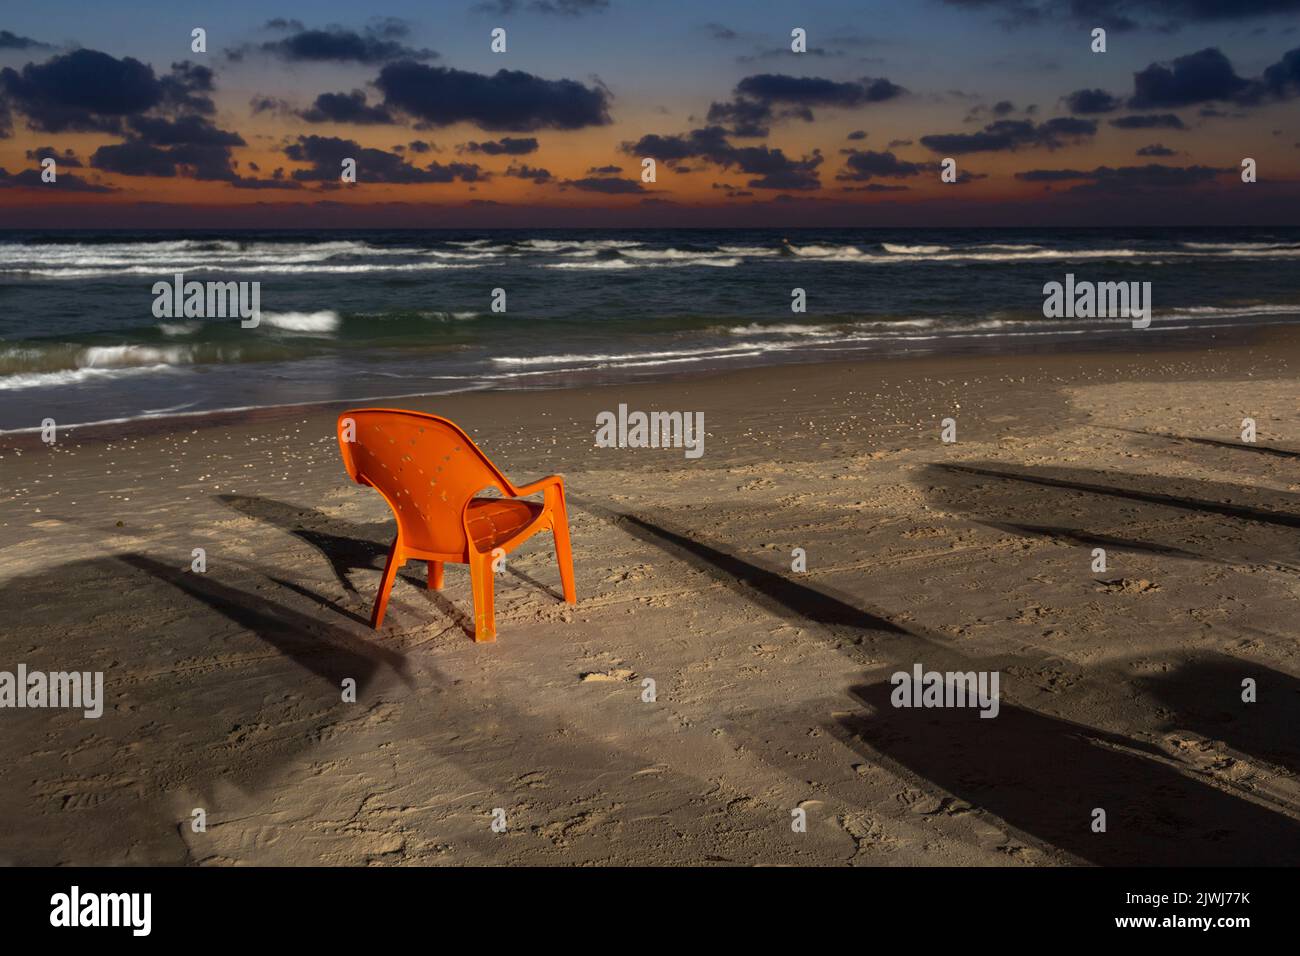 Orange lawn chair on sandy beach at dusk, Bat Yam, Israel Stock Photo